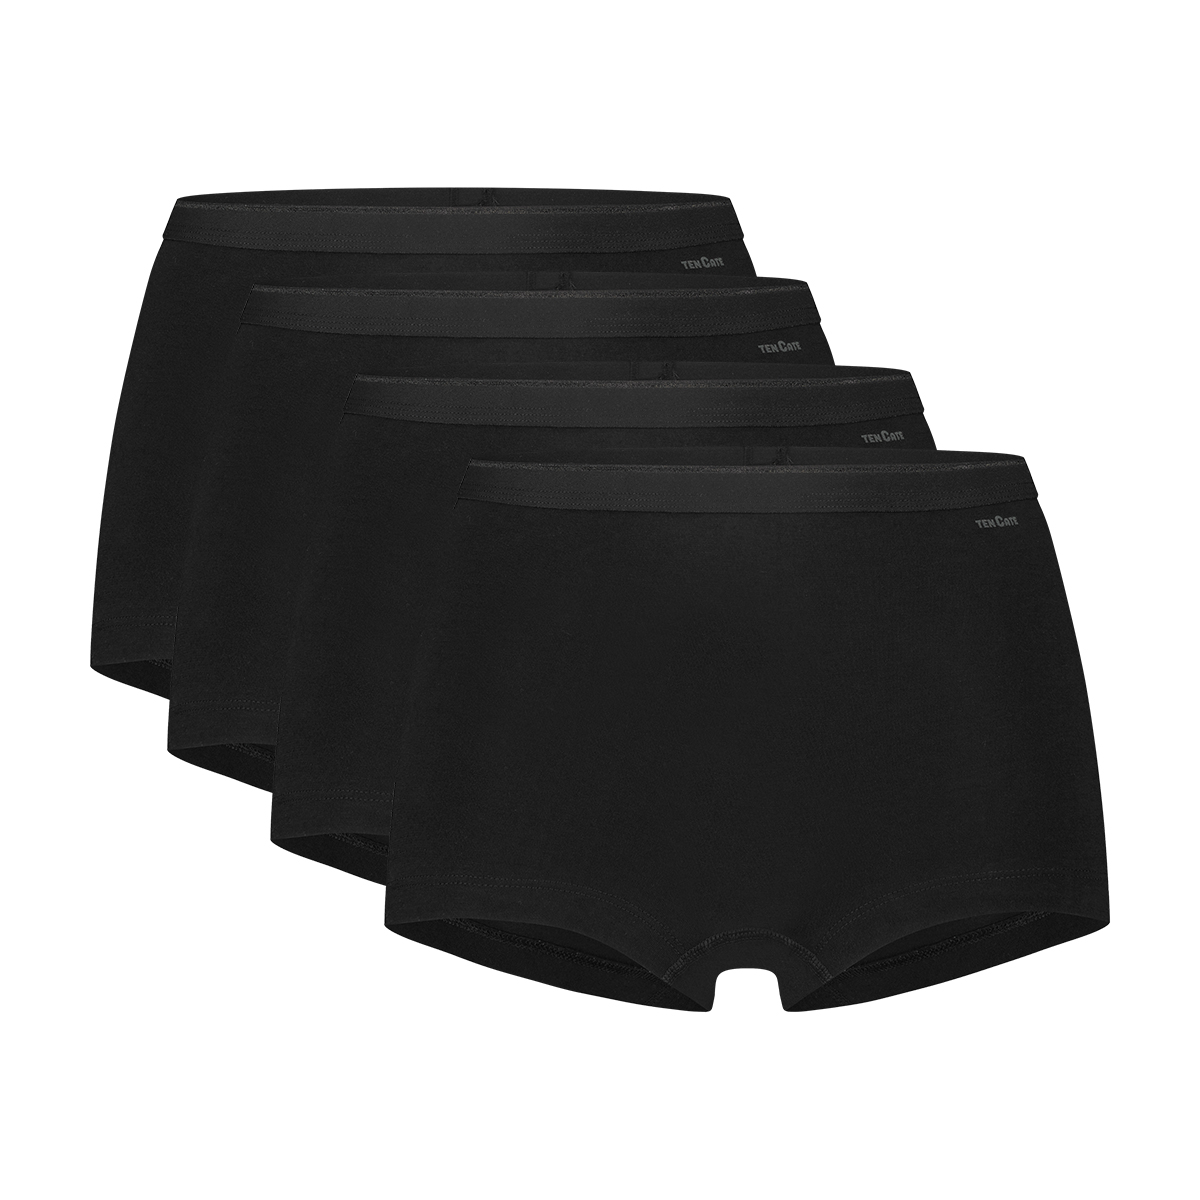 ten Cate Basics shorts zwart 4 pack voor Dames | Maat XL